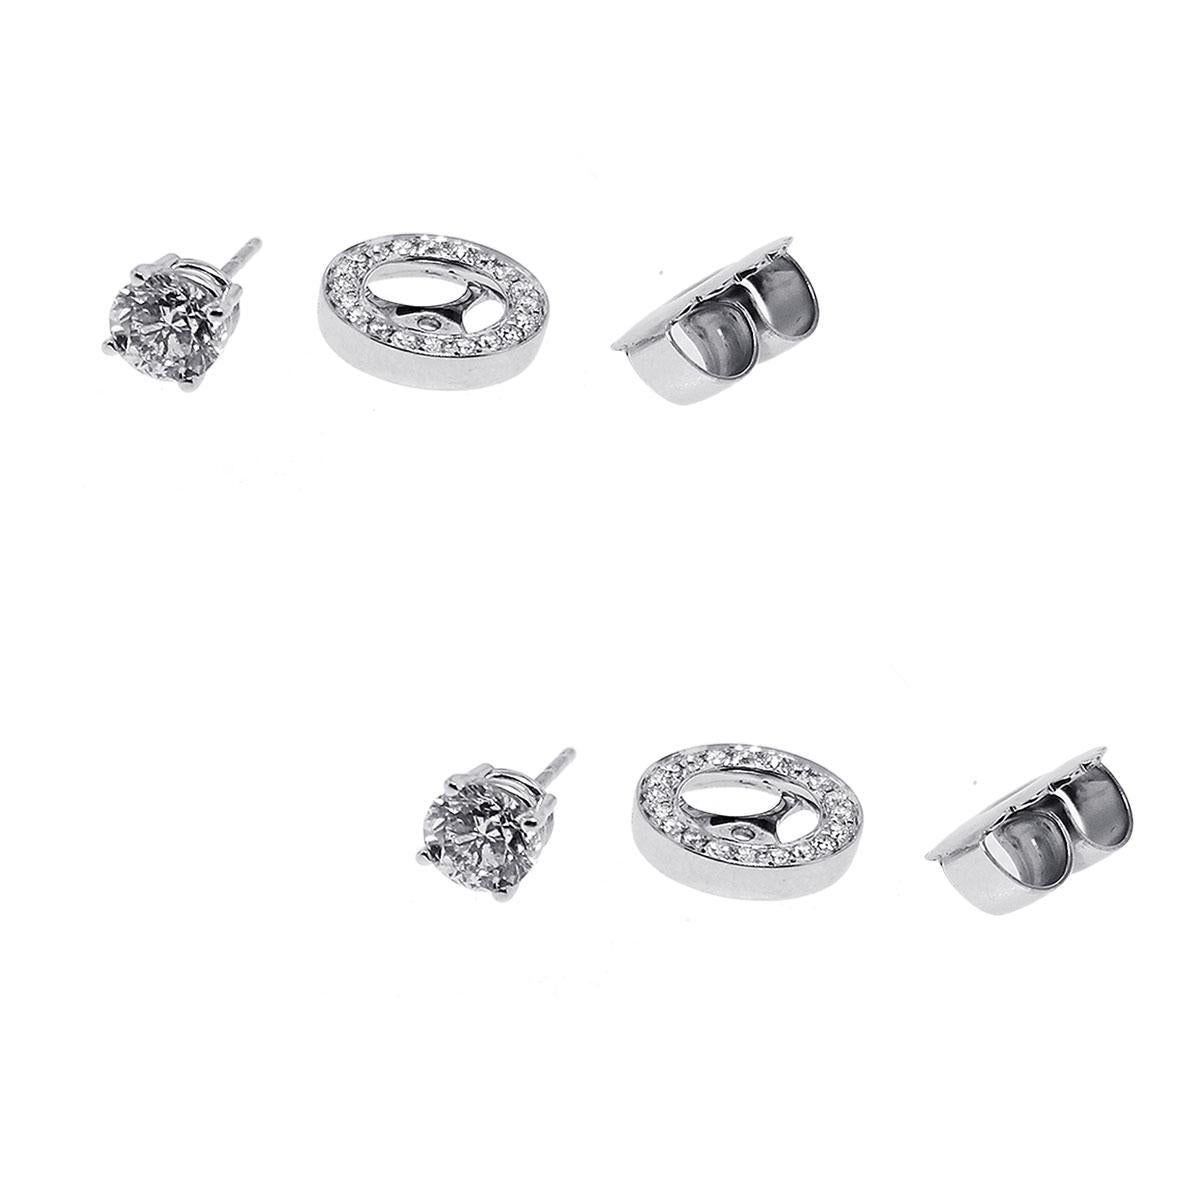 1.50 carat diamond earrings